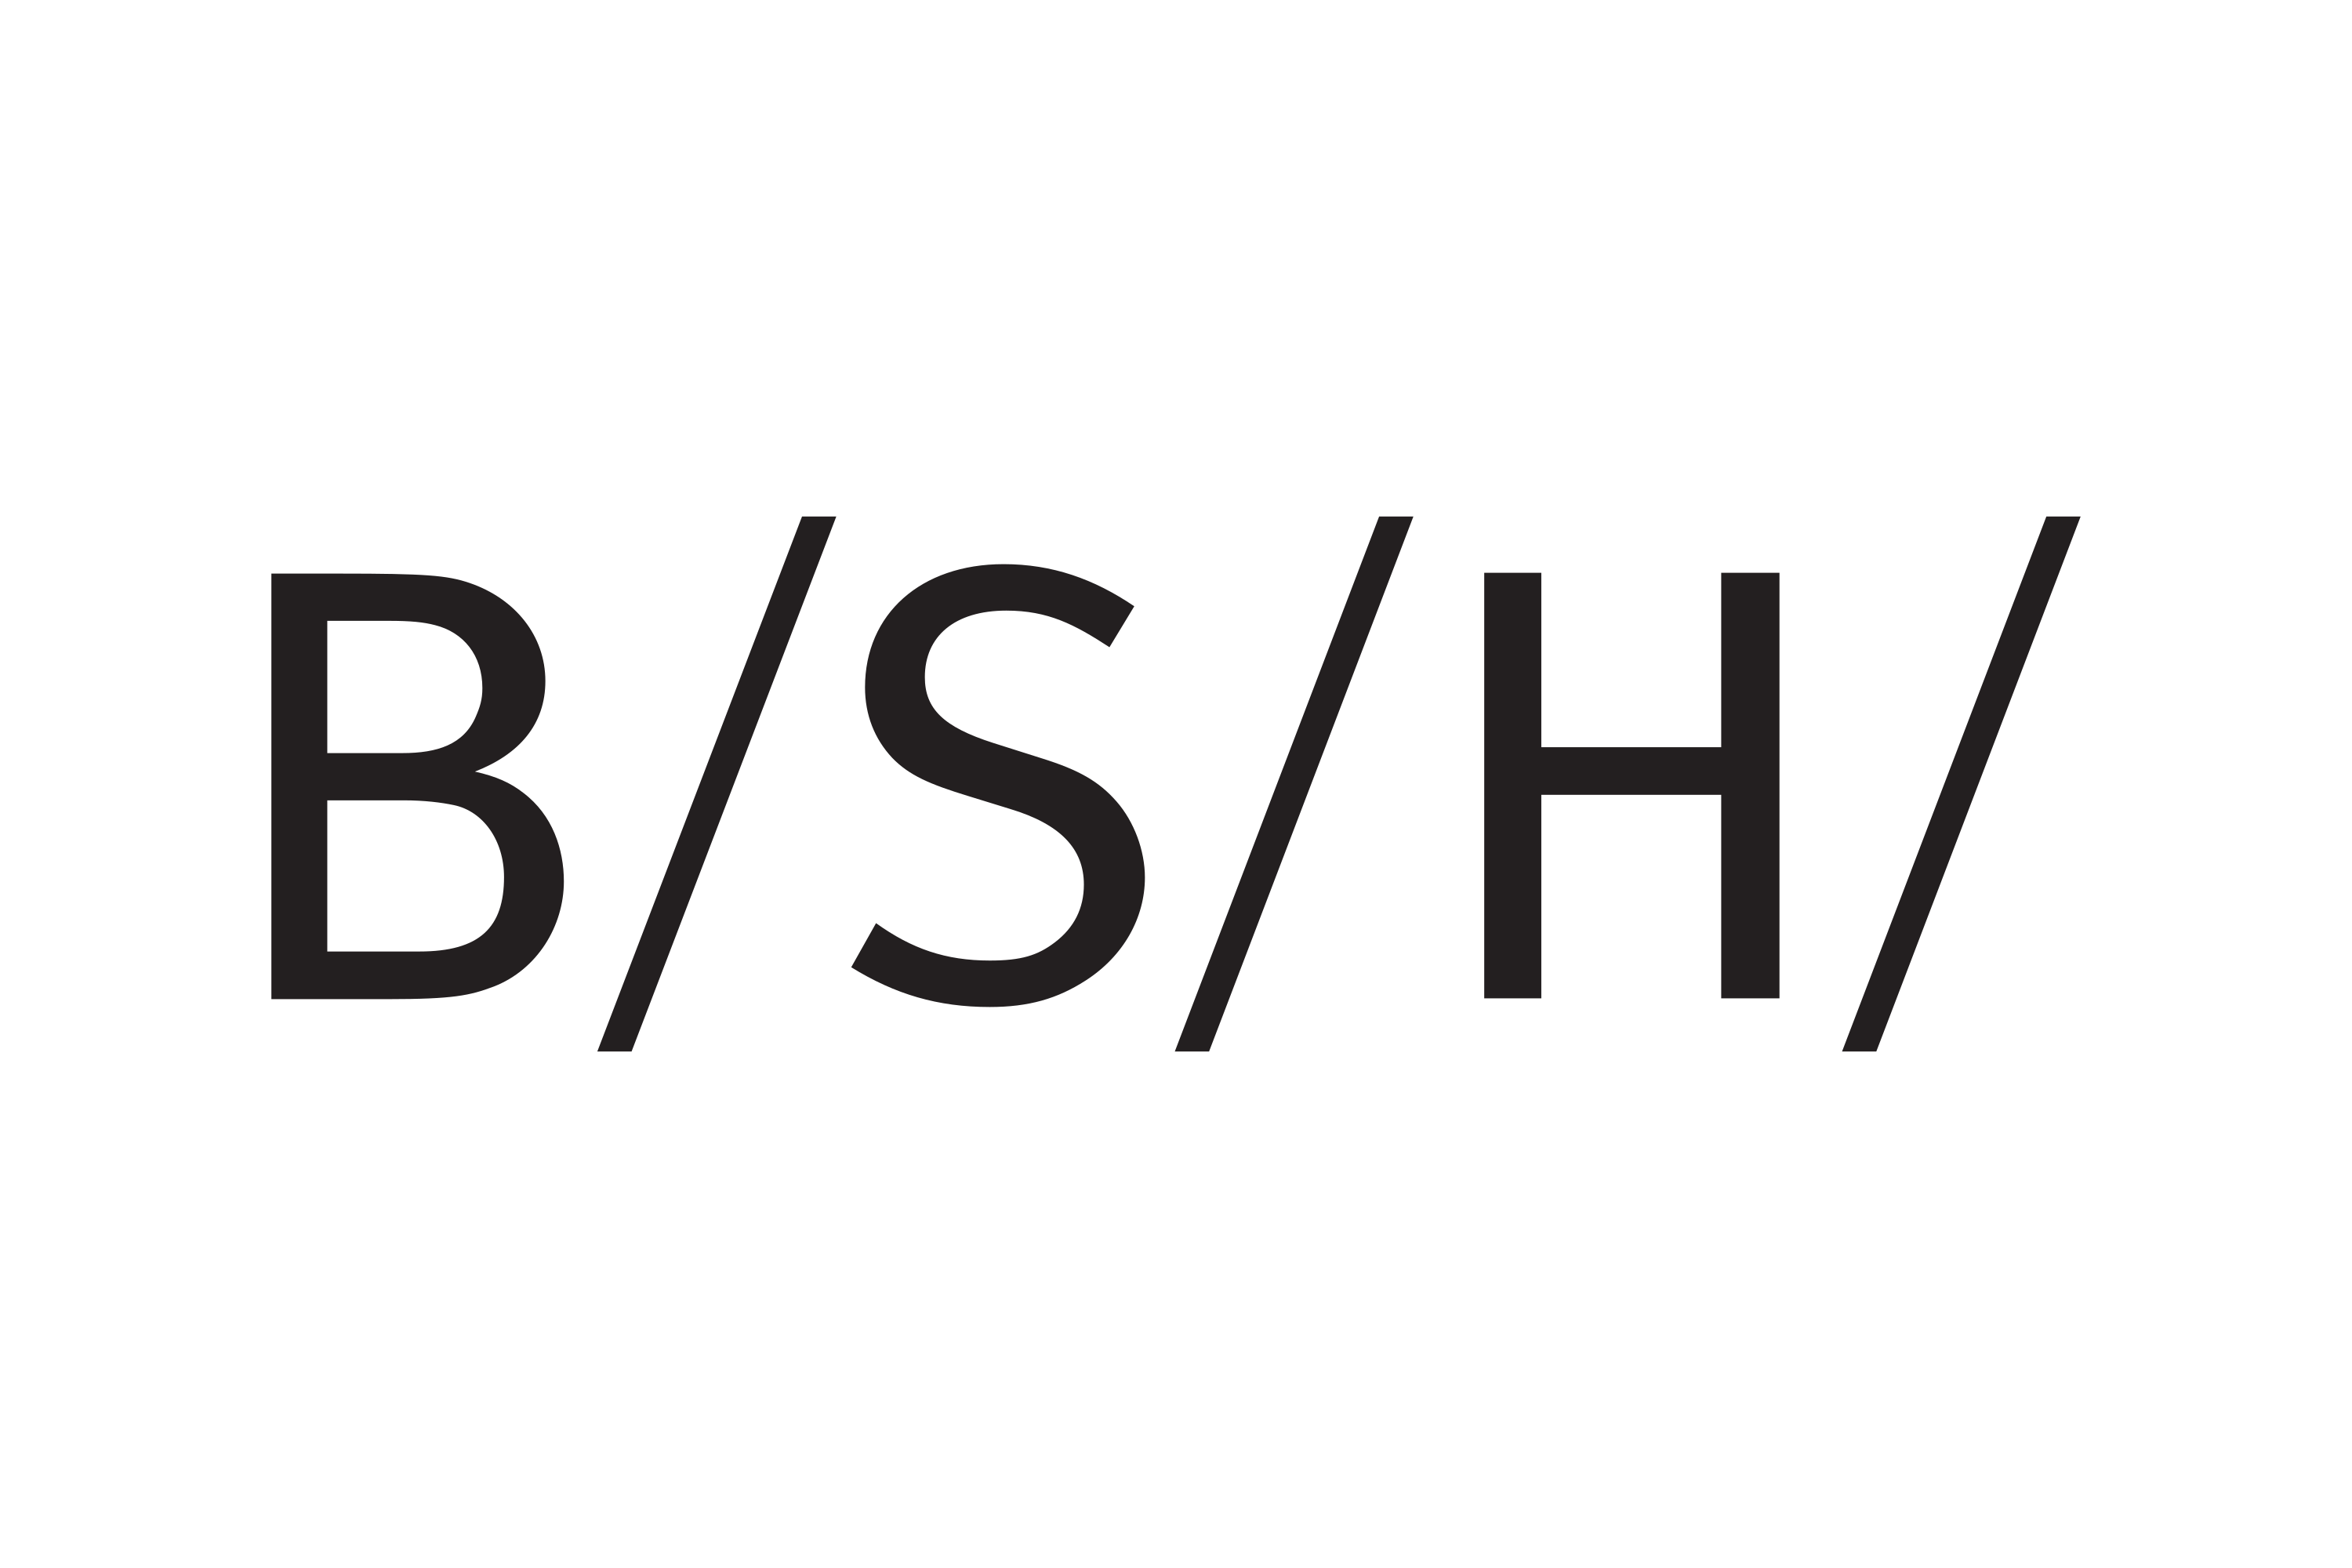 BSH Home Appliances Logo